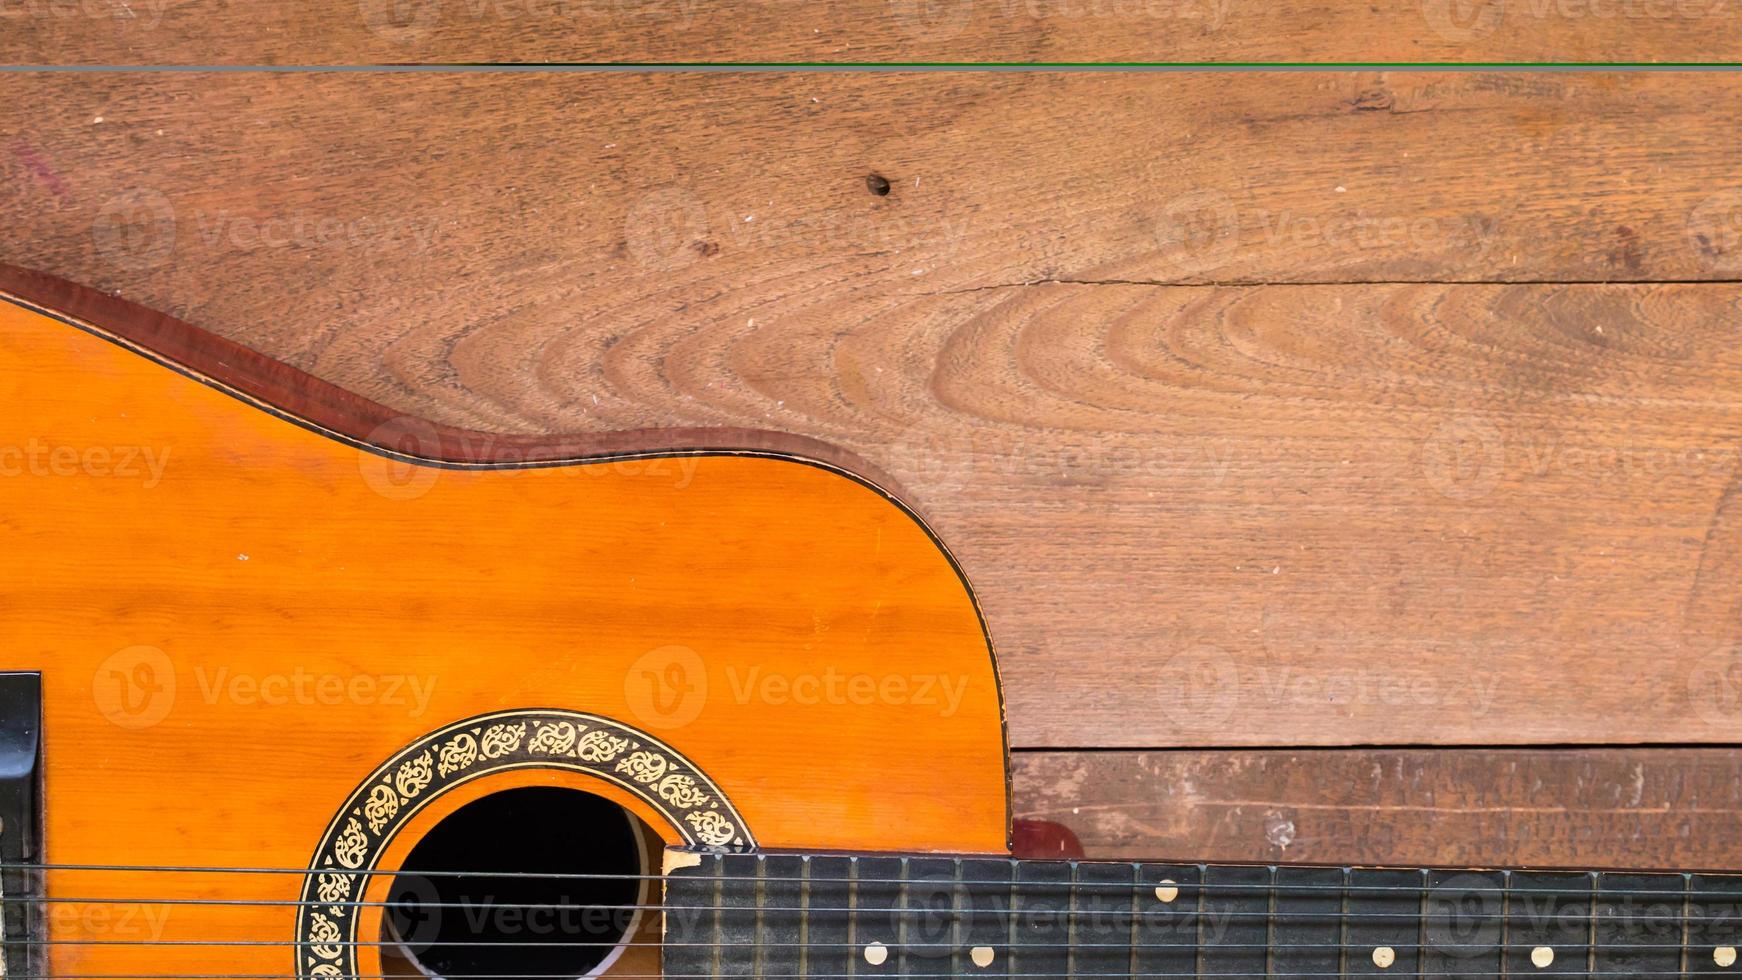 espacio de trabajo de vista superior con guitarra acústica sobre fondo de mesa de madera. foto